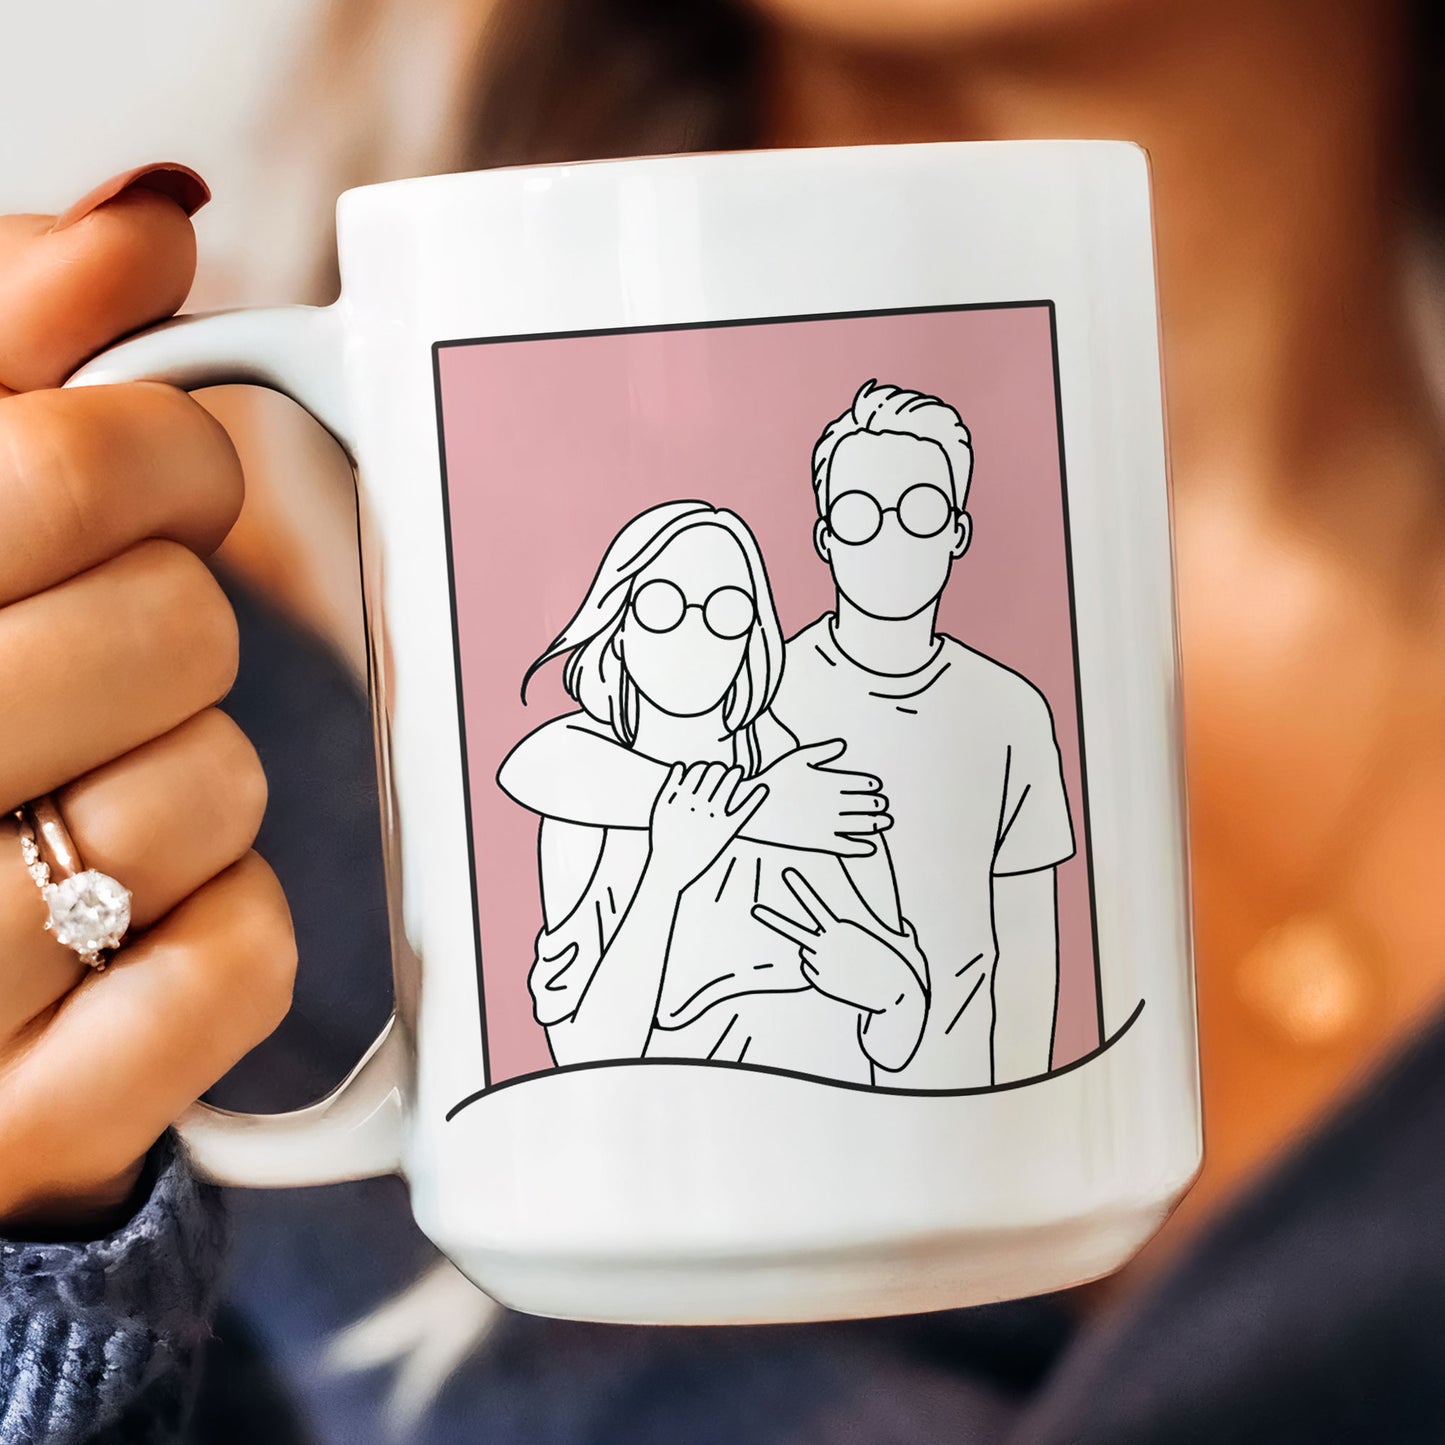 Congrats On Being My Boyfriend Line Art - Personalized Mug